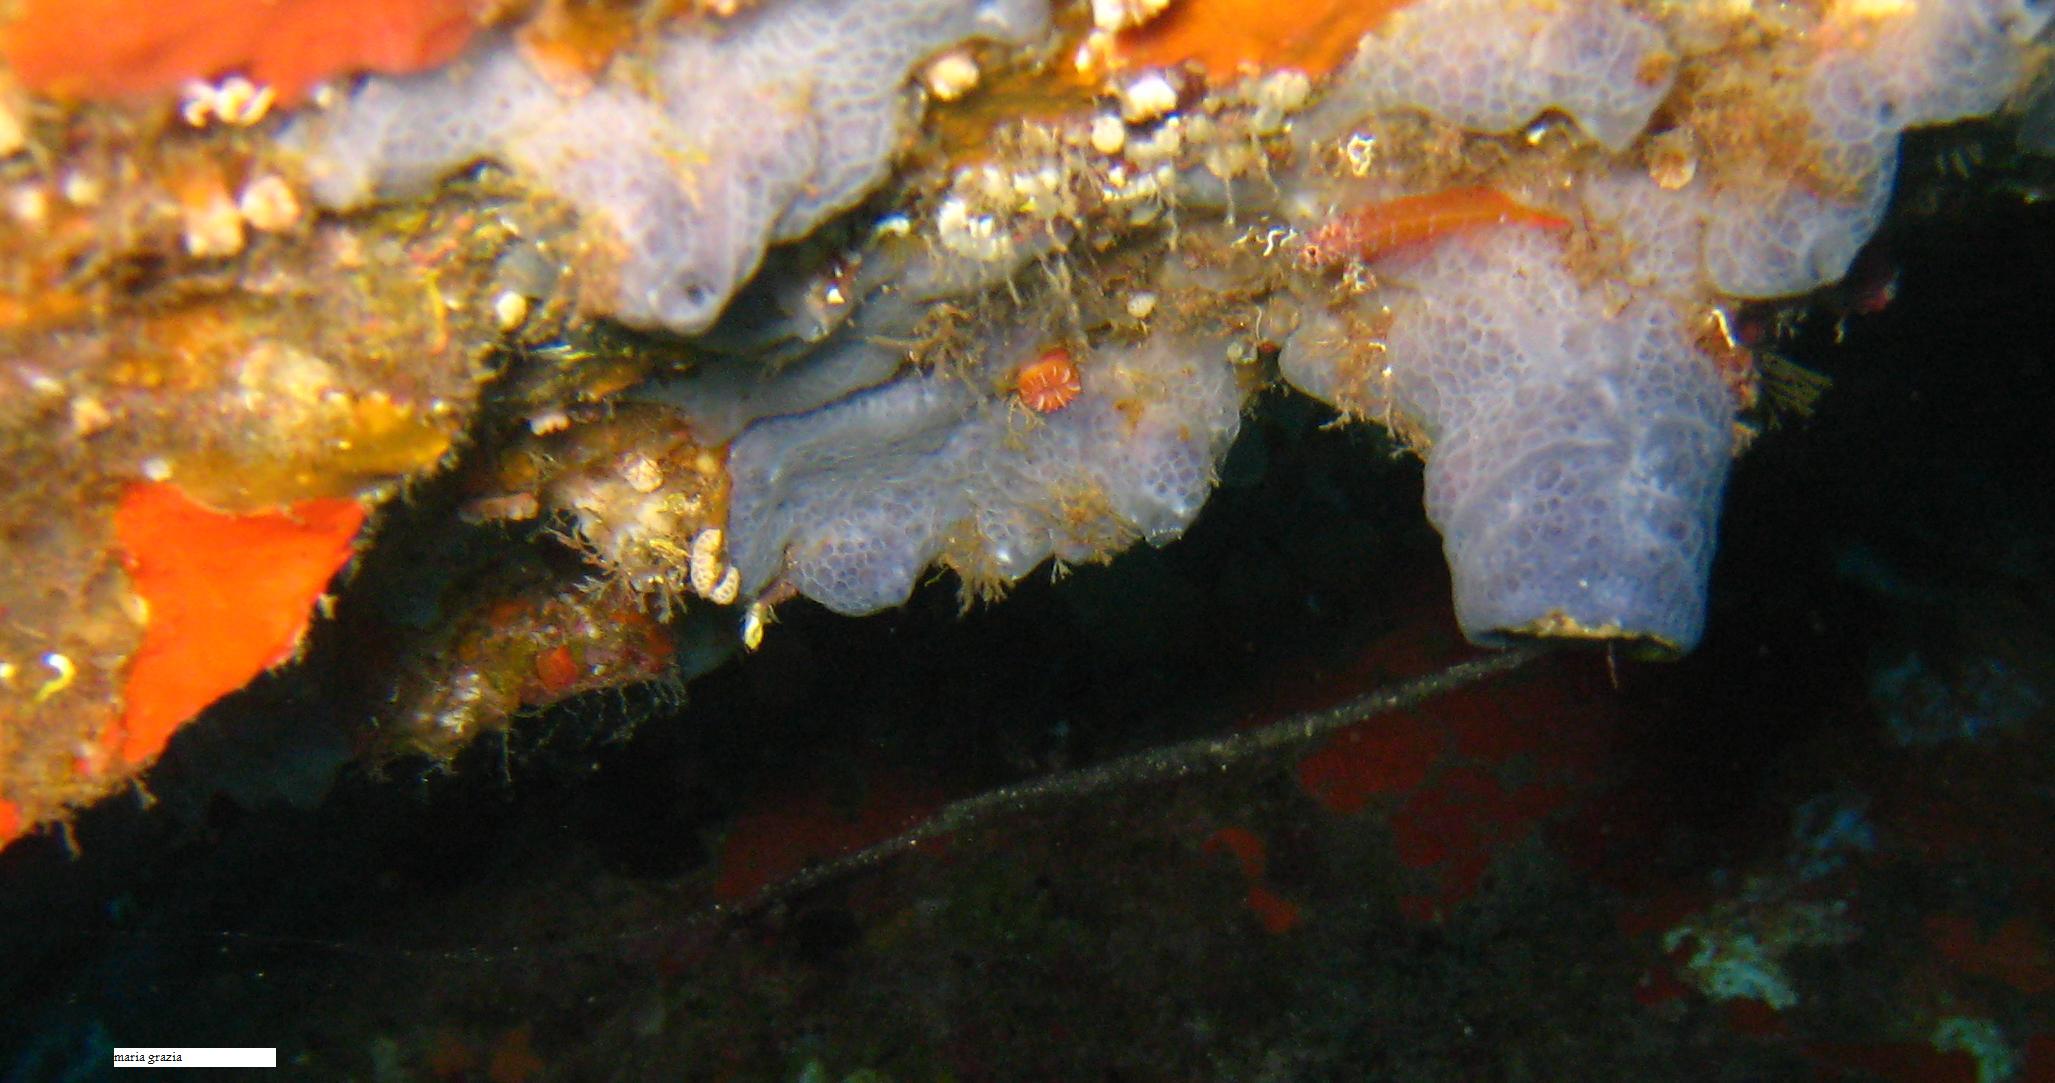 Filamenti del mollusco Vermetus triquetrus